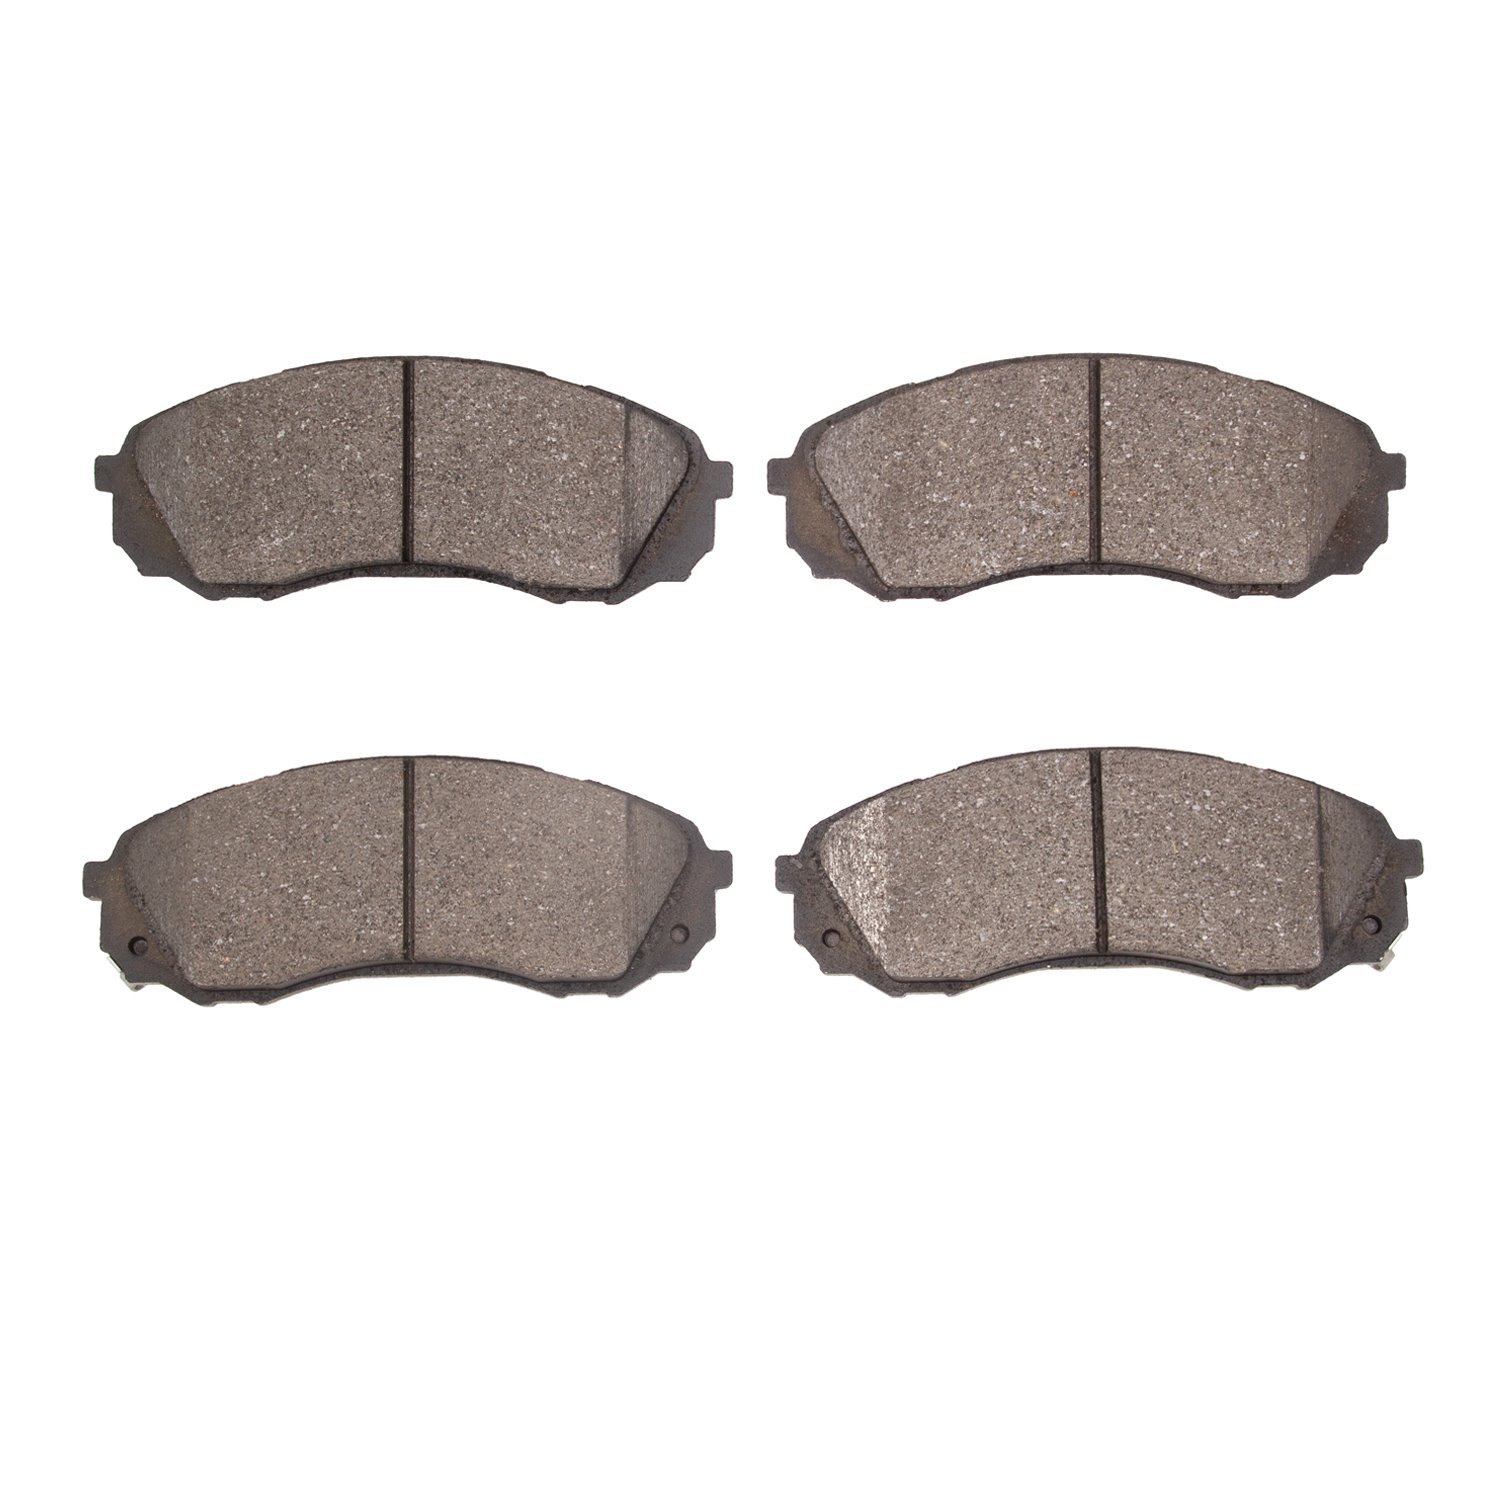 1310-1566-00 3000-Series Ceramic Brake Pads, 2009-2019 Multiple Makes/Models, Position: Front